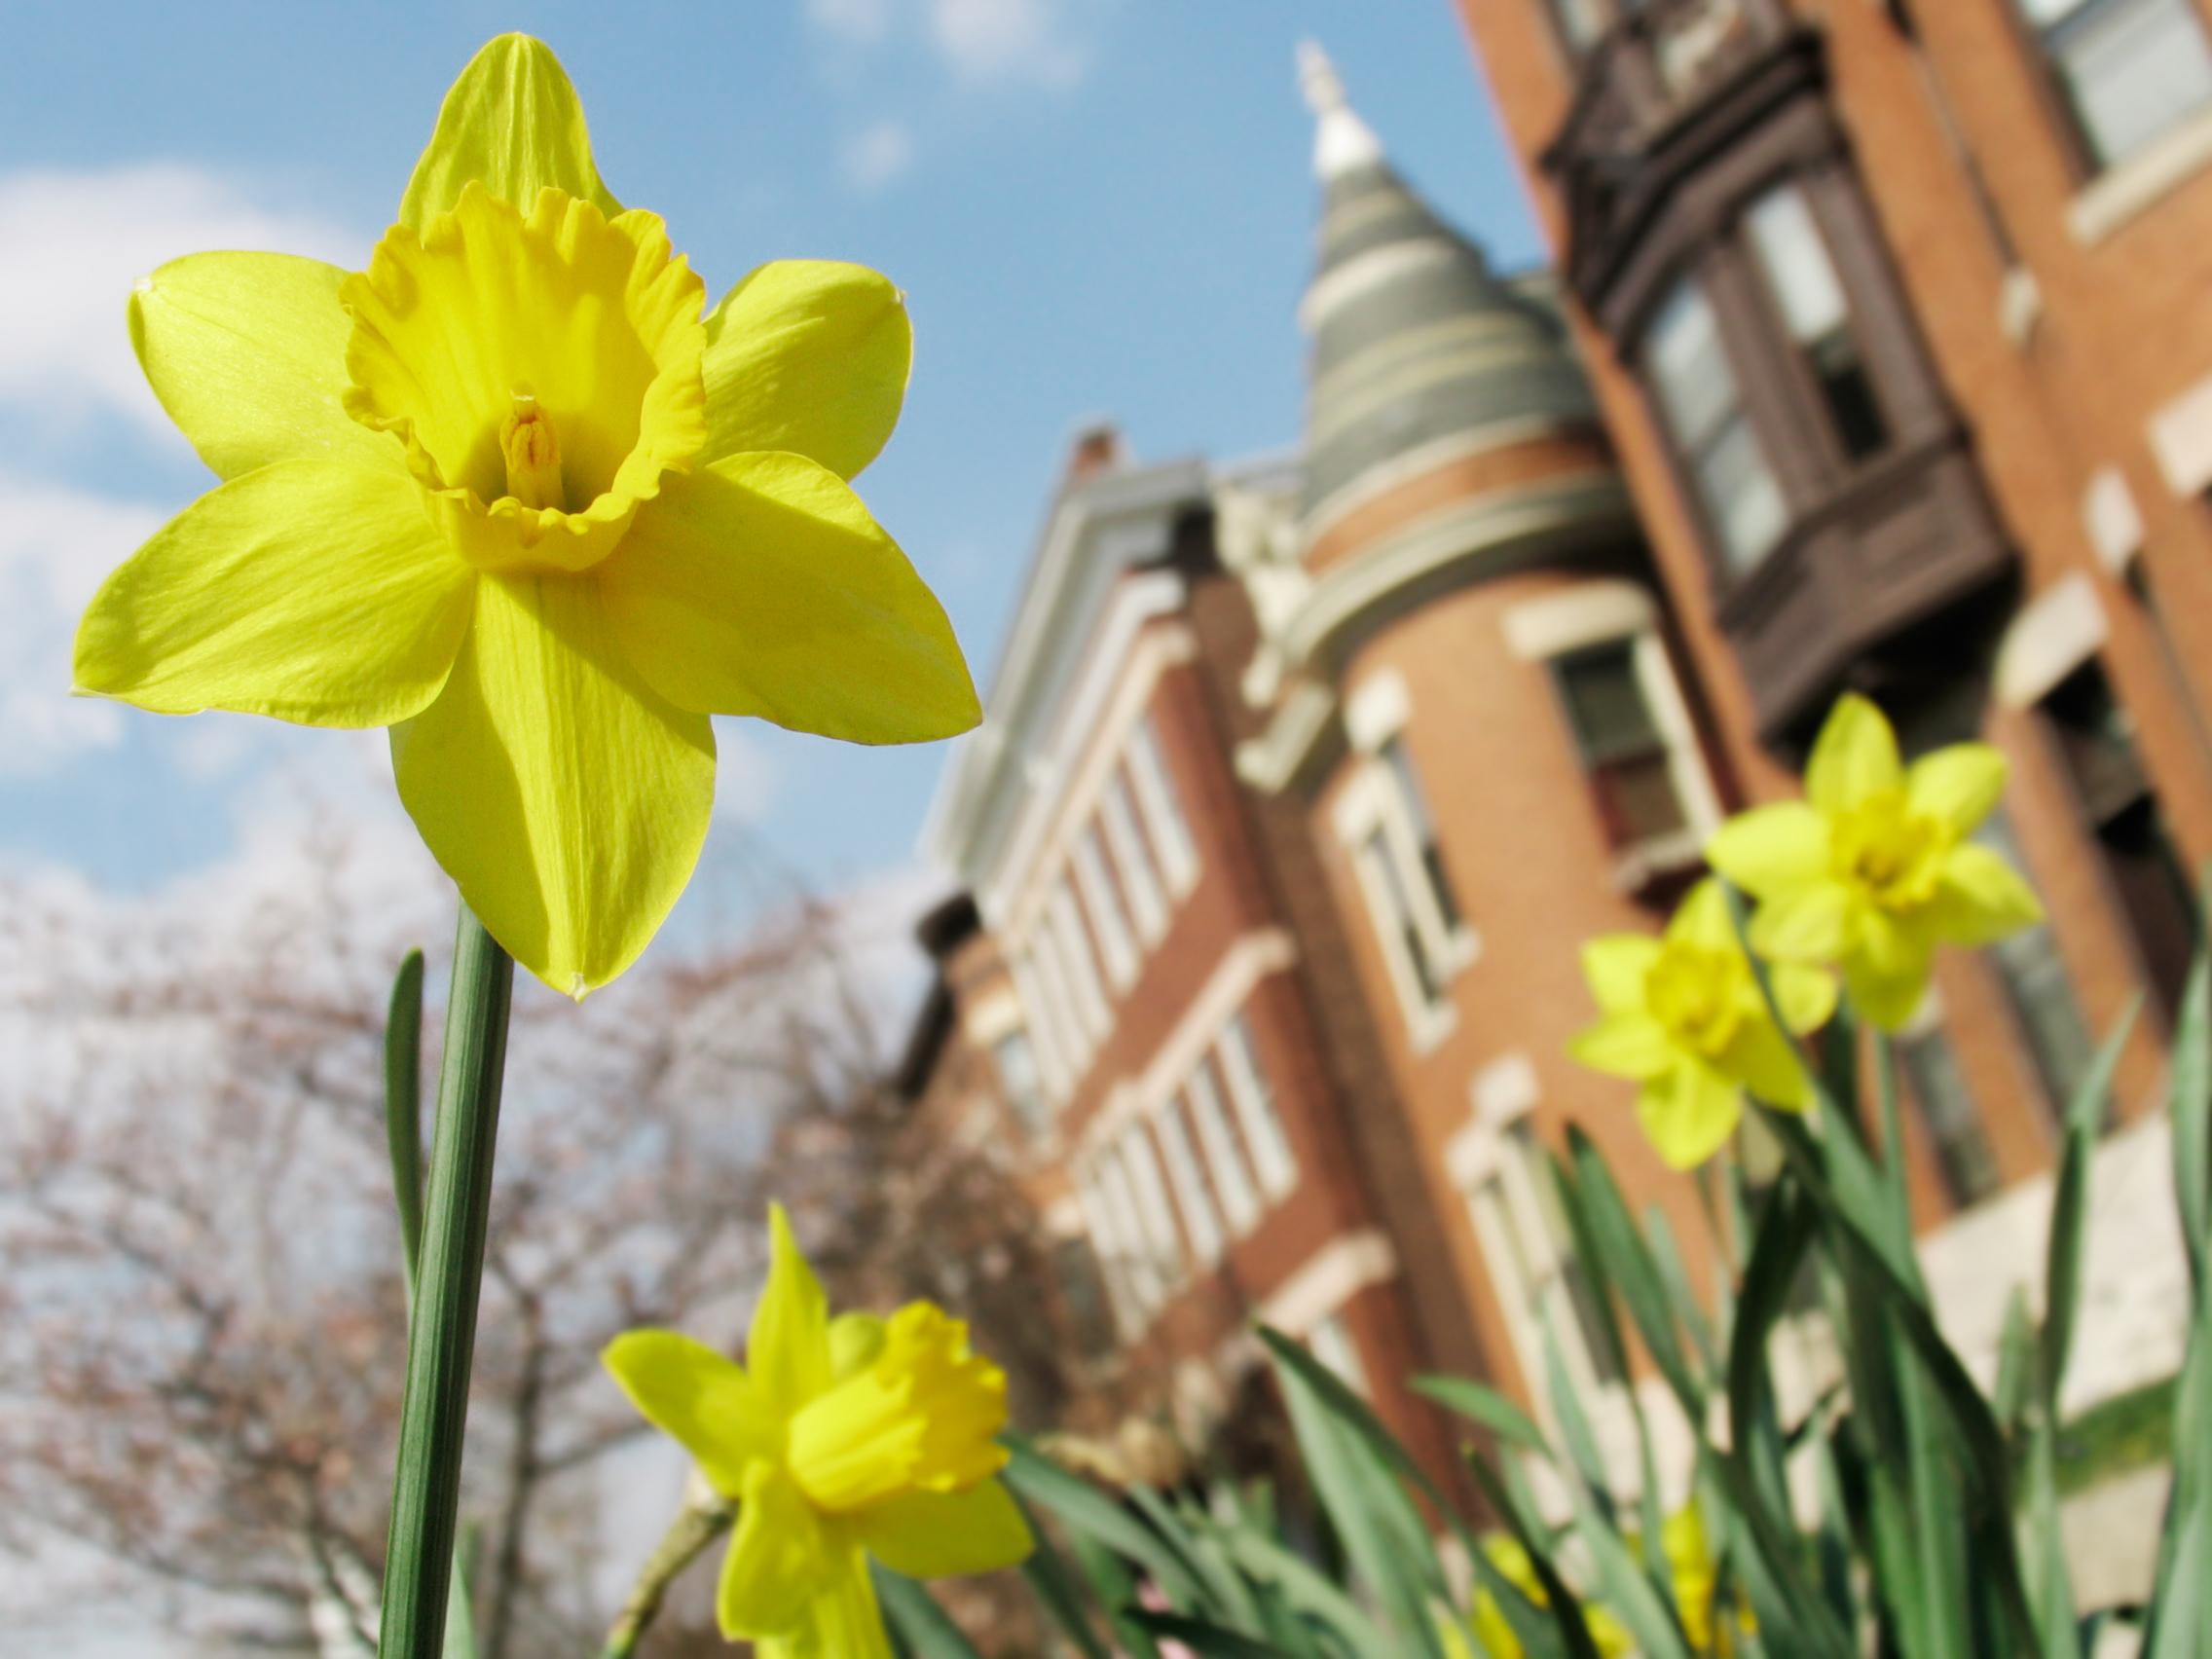 Visit Maryland Spring 2020 - Business Associations